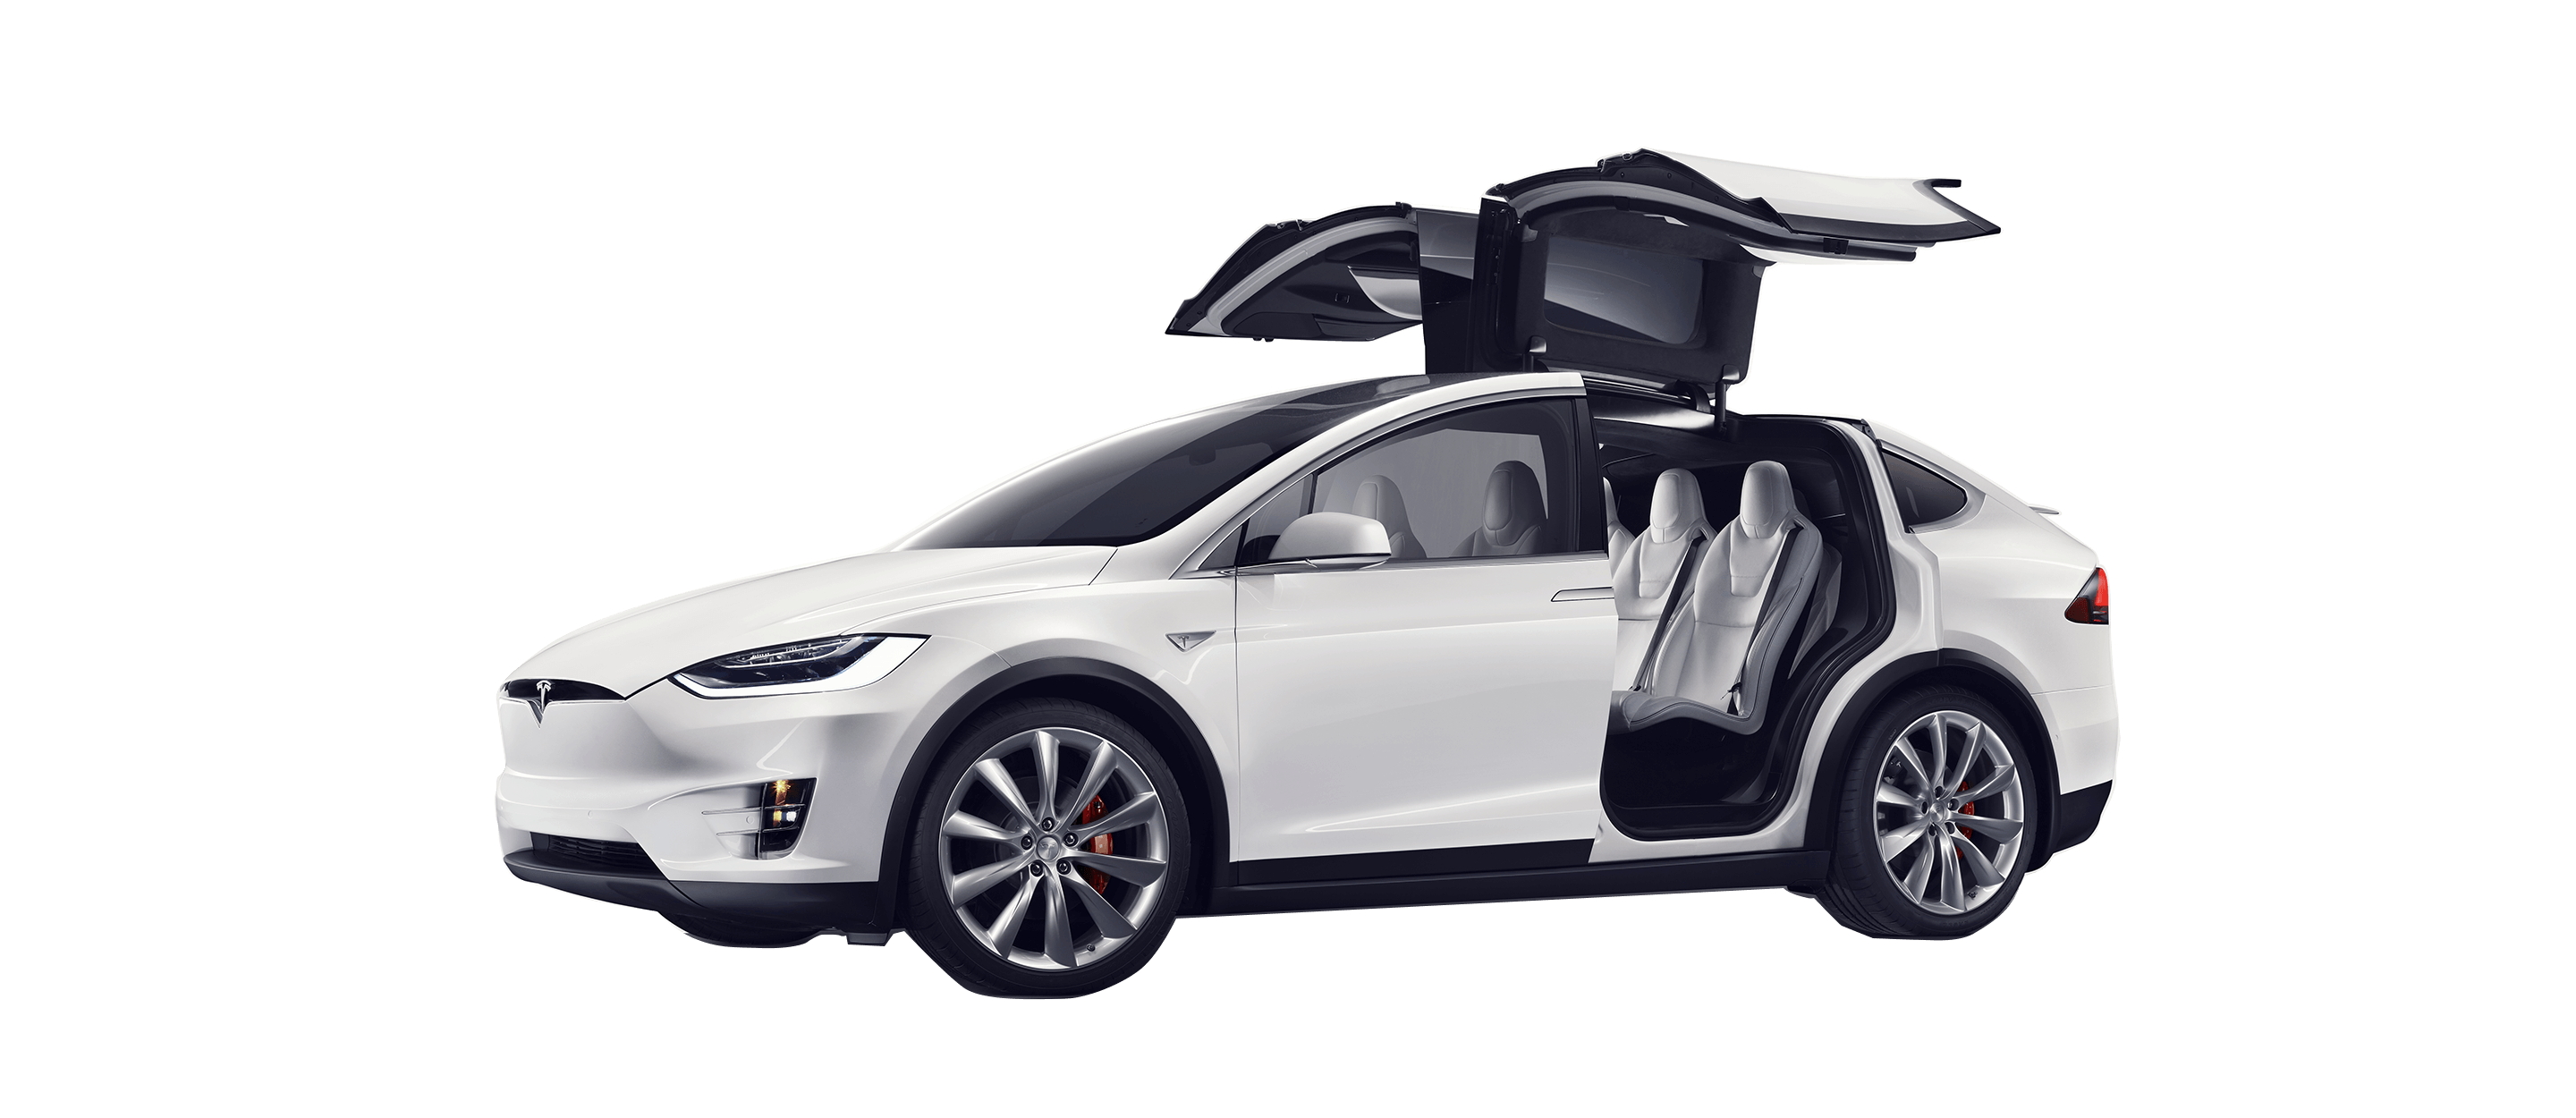 Tesla Model X PNG Image